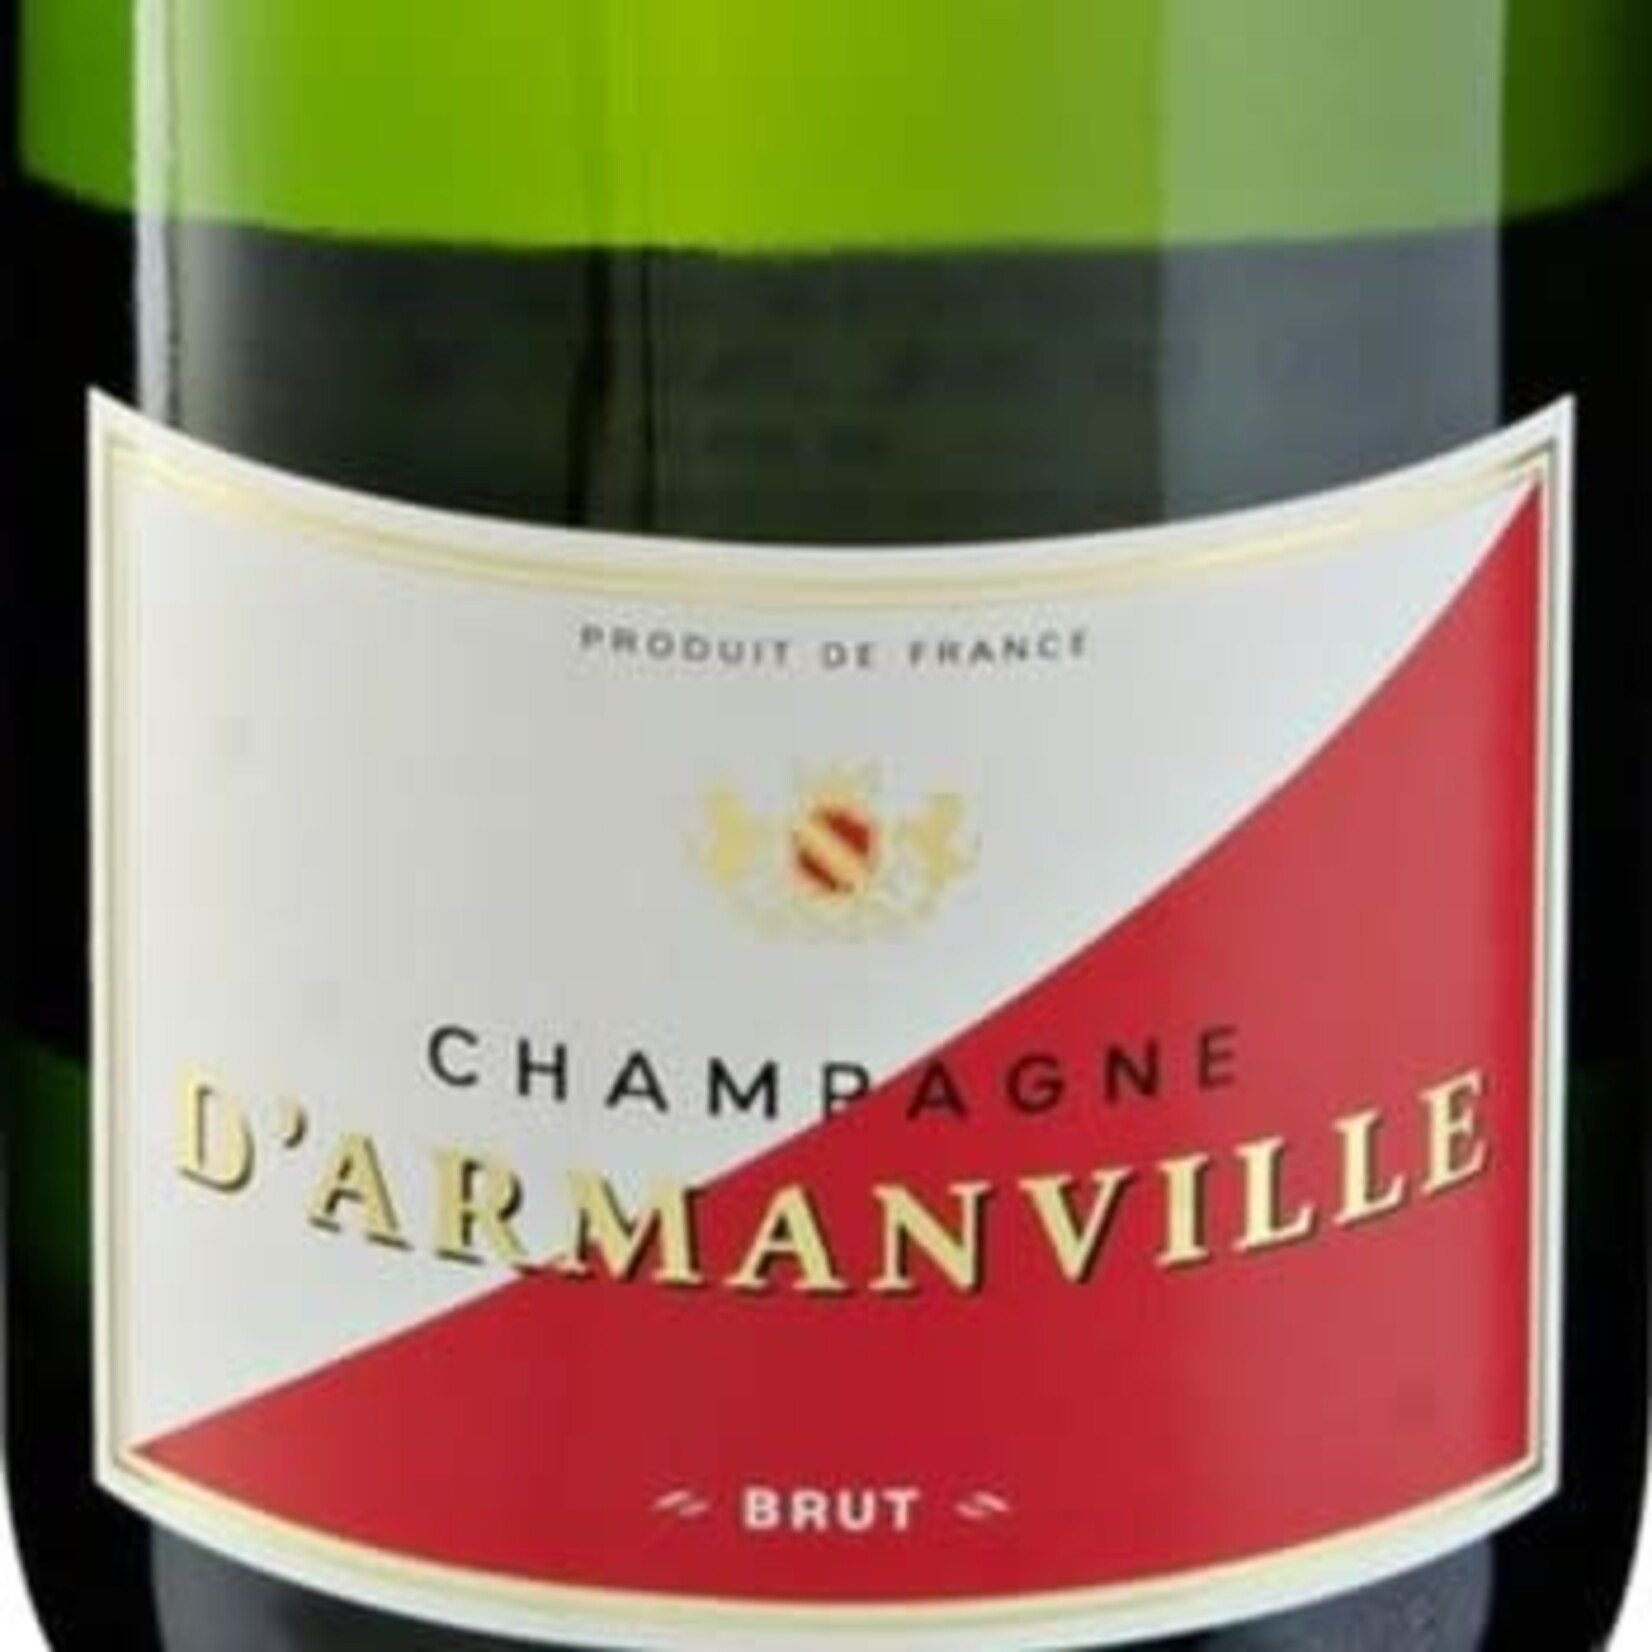 D'Armanville Champagne Brut France - Western Reserve Wines